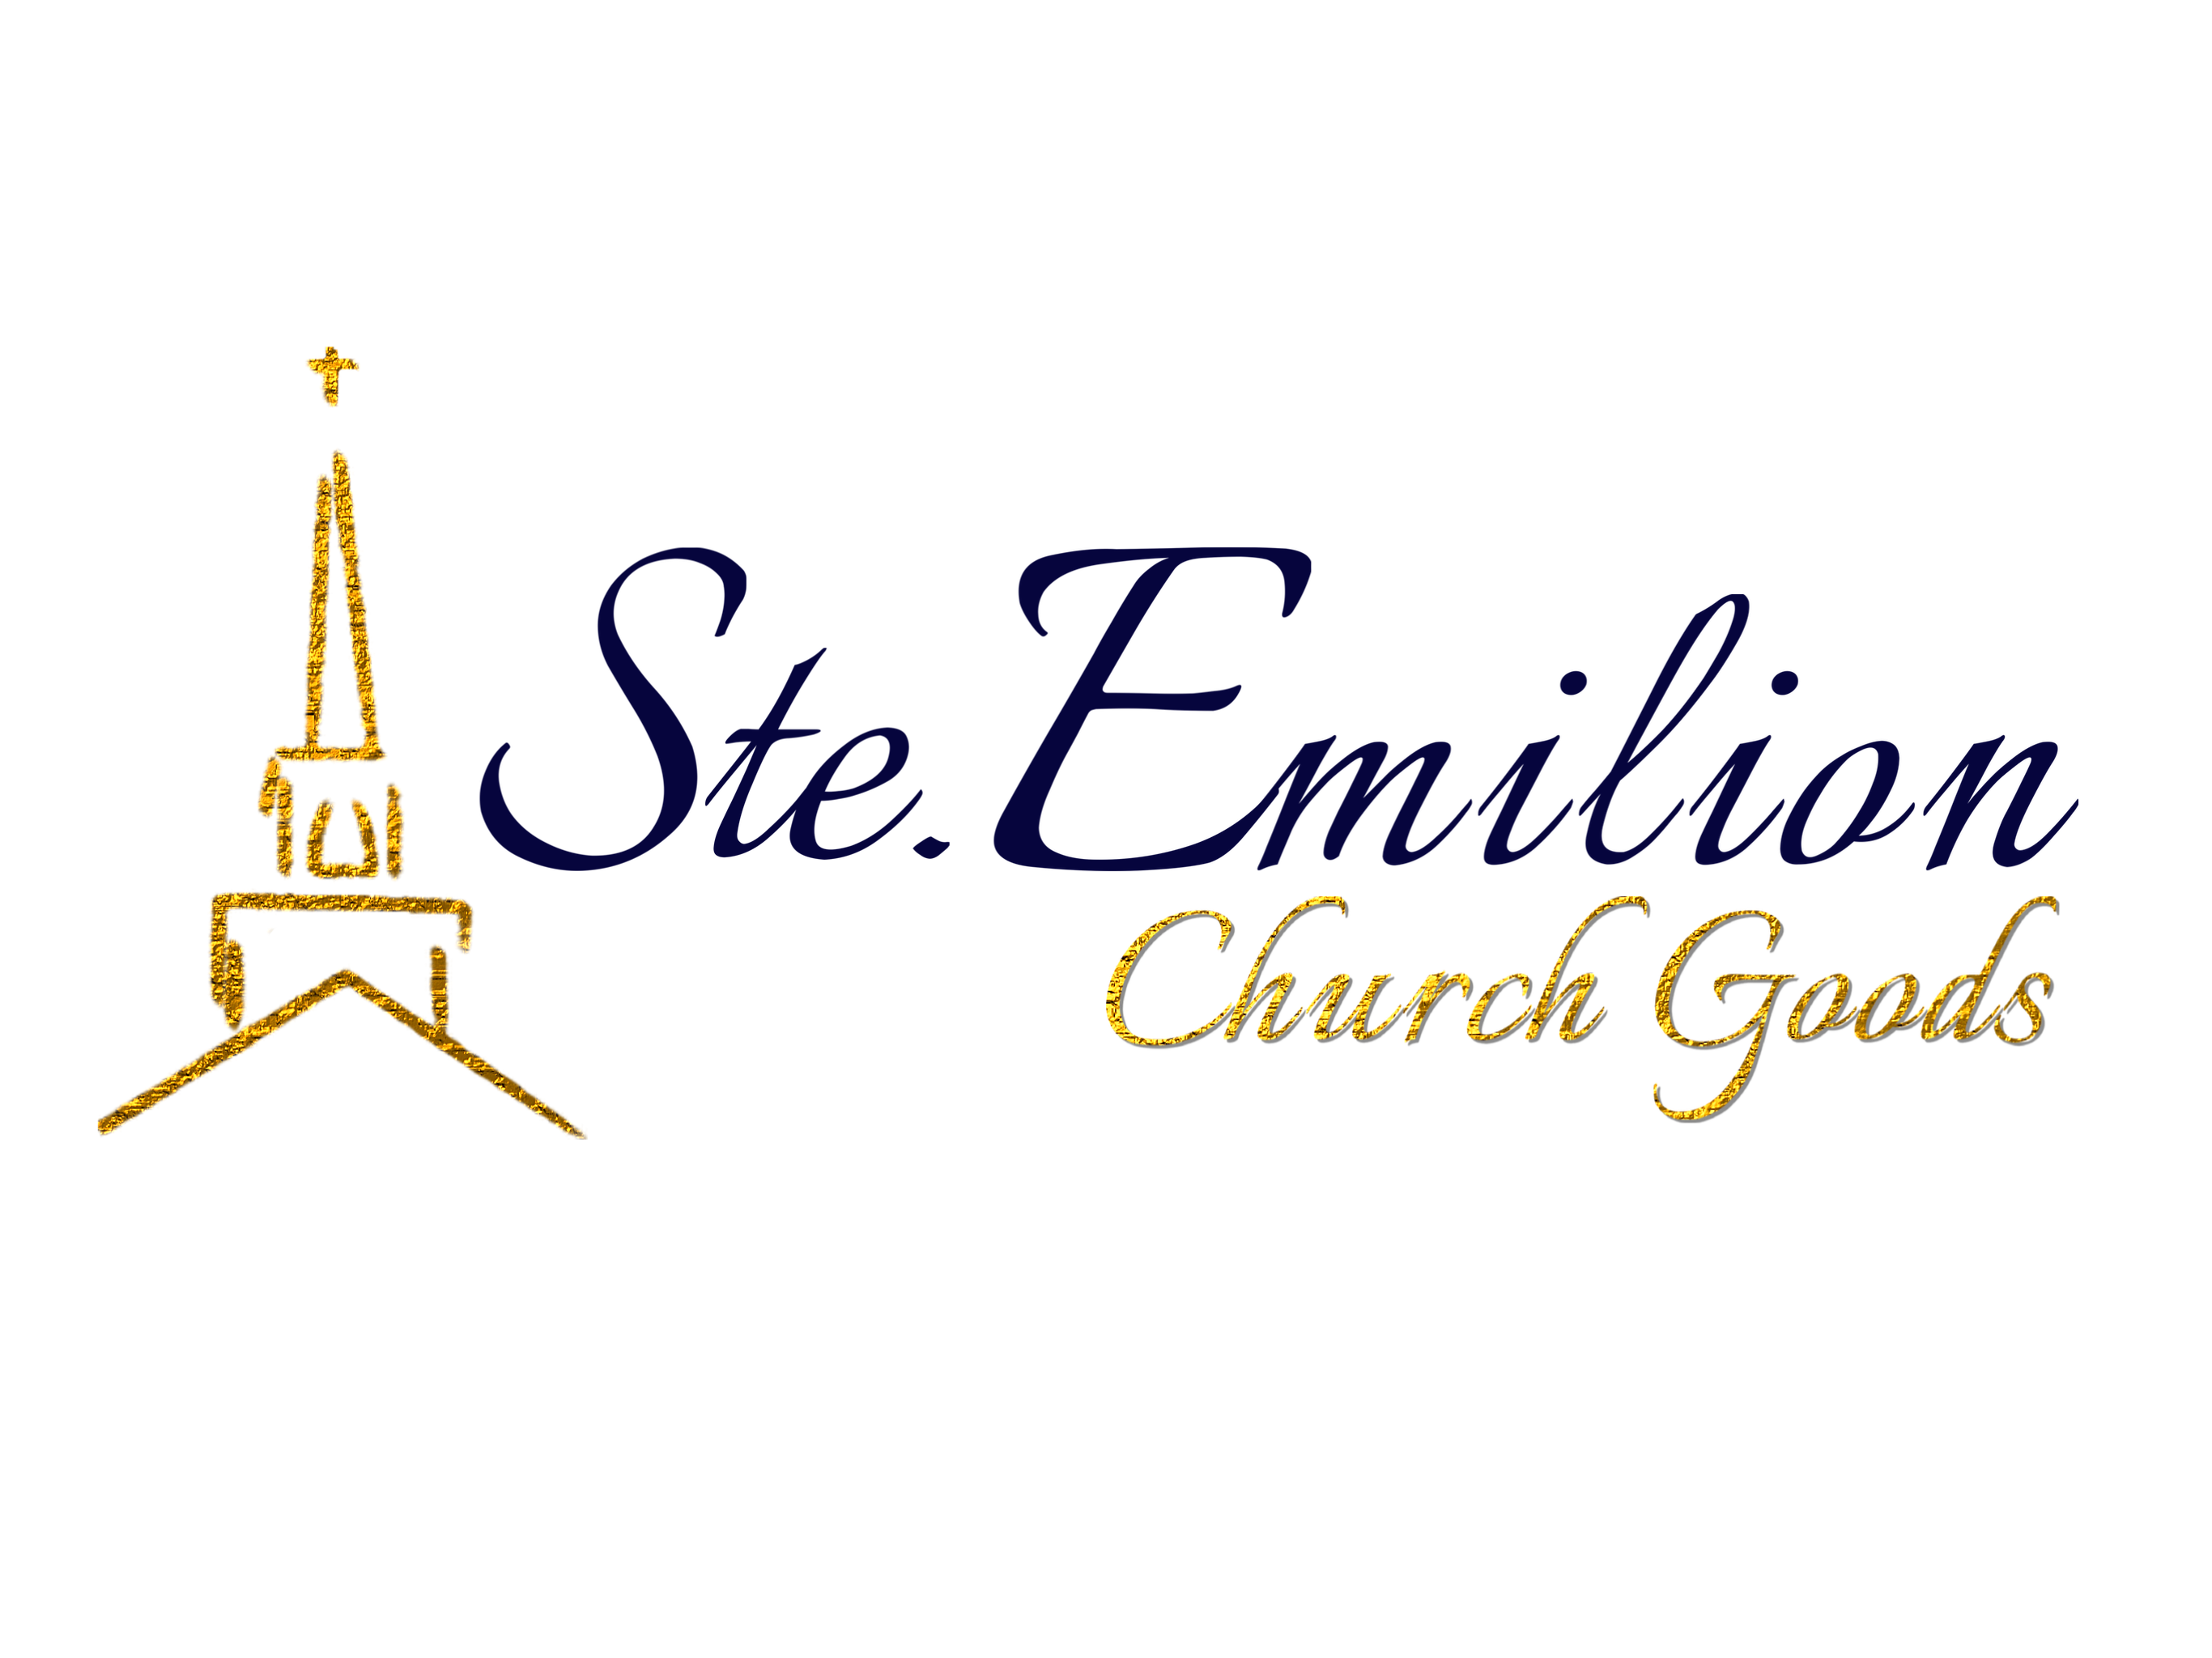 Ste. Emilion Church Goods